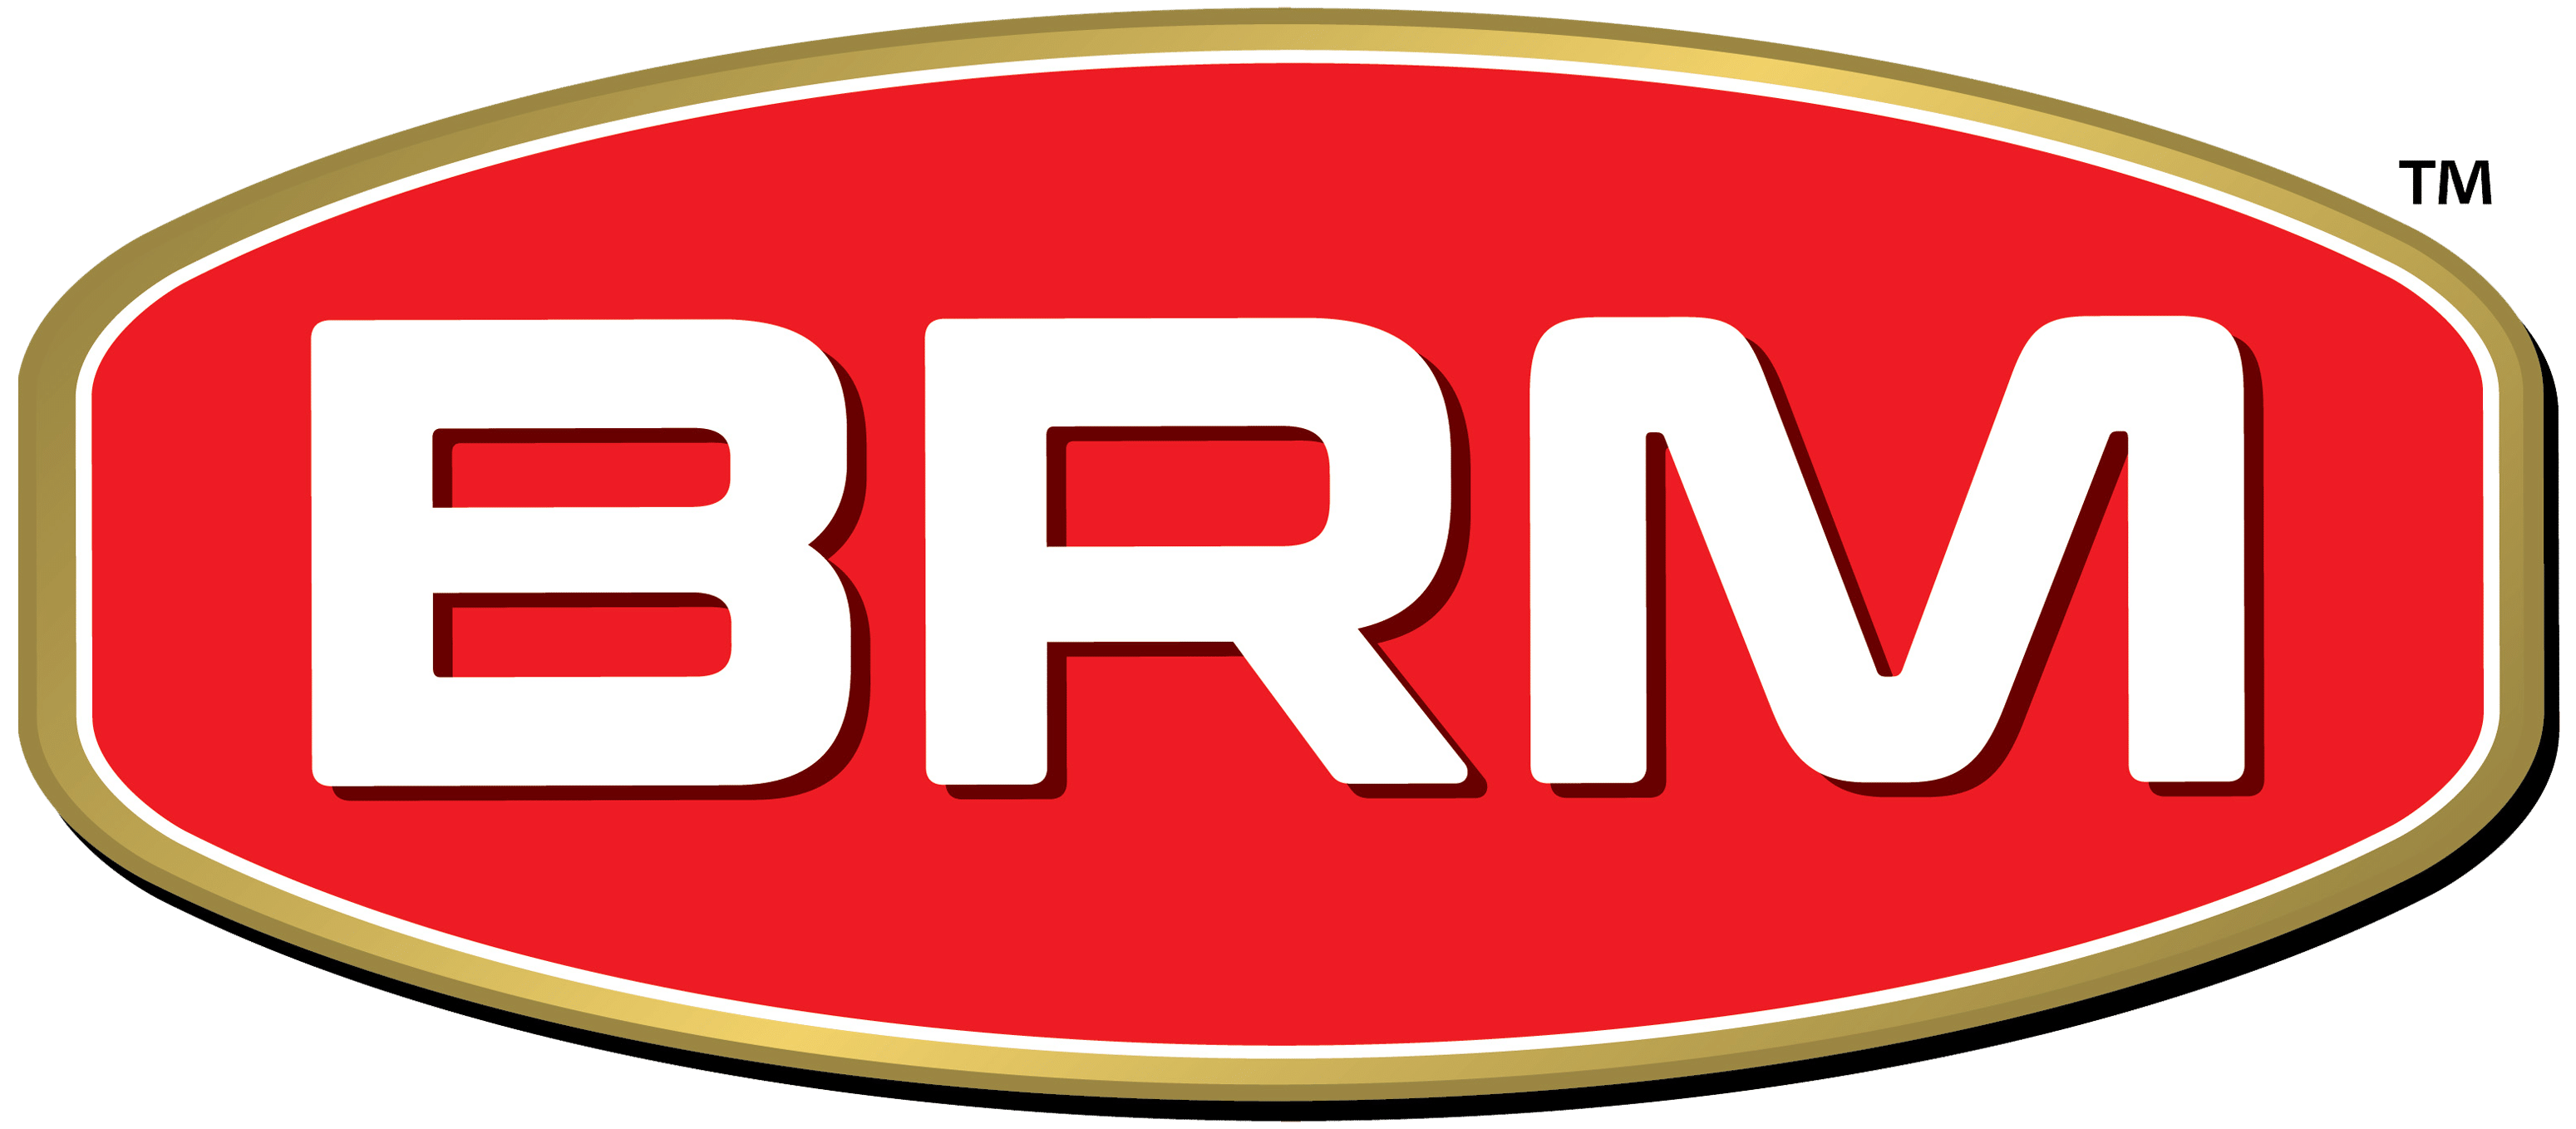 BRM